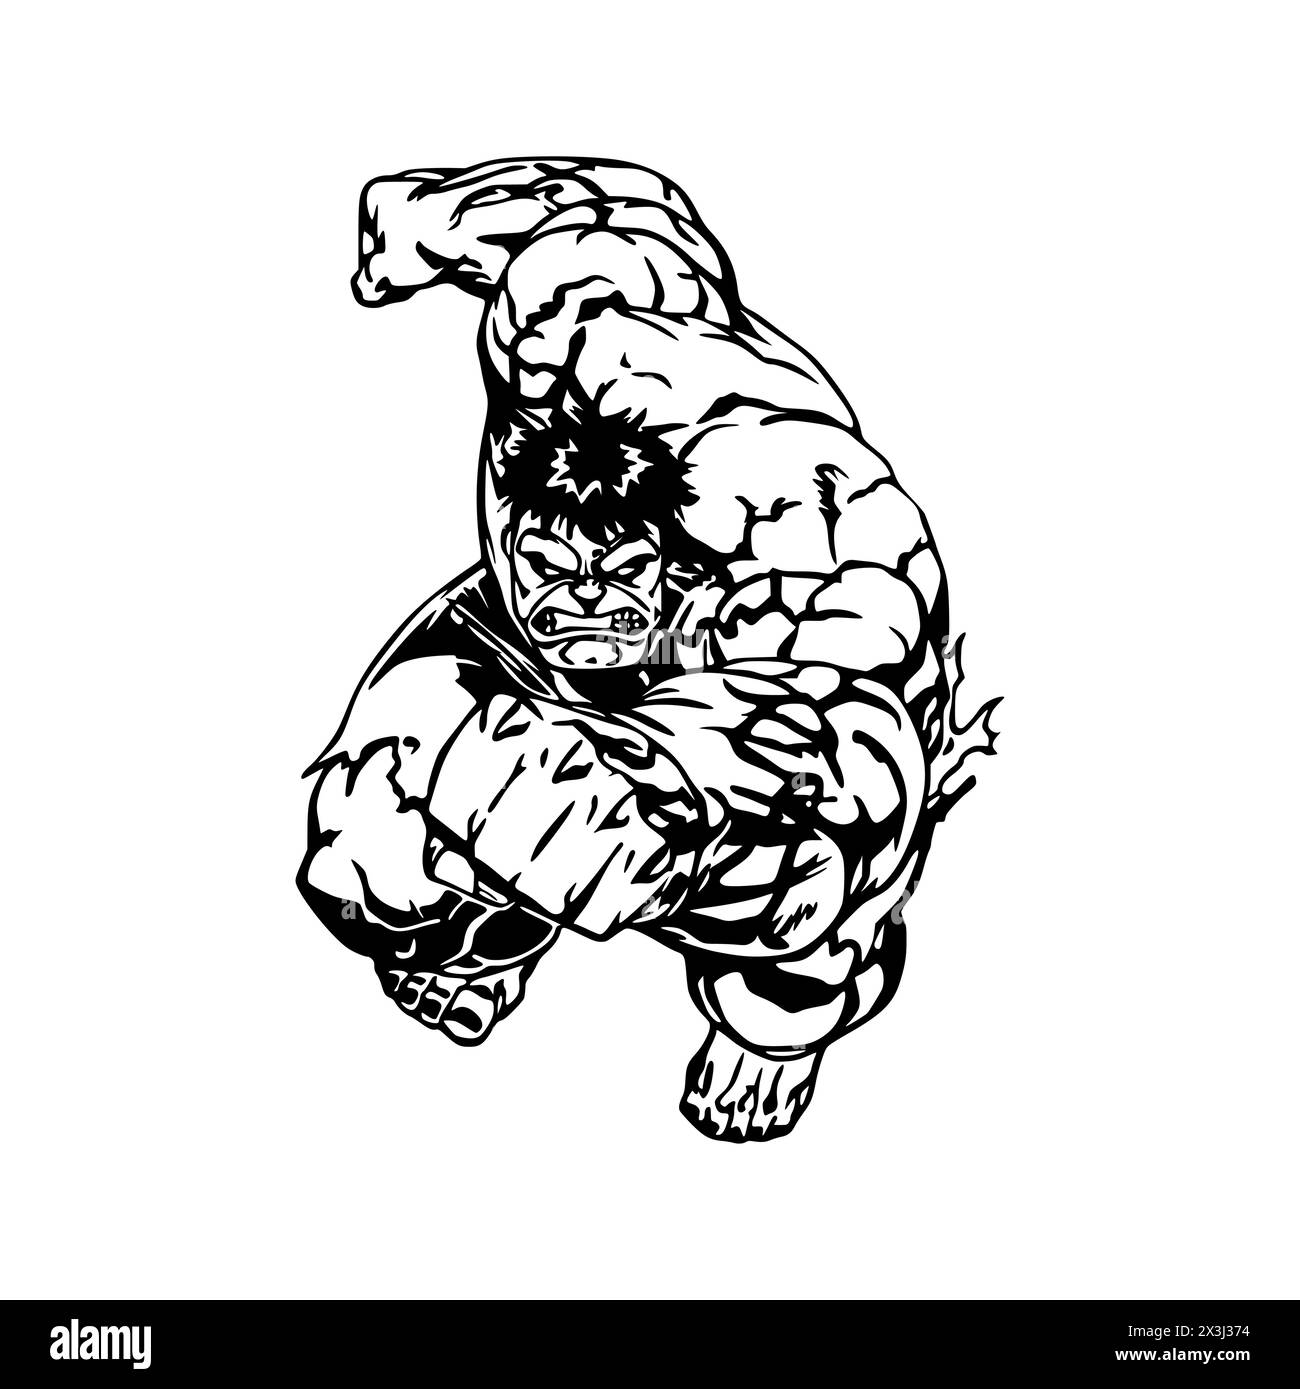 Hulk punch figter line art design vector Stock Vector